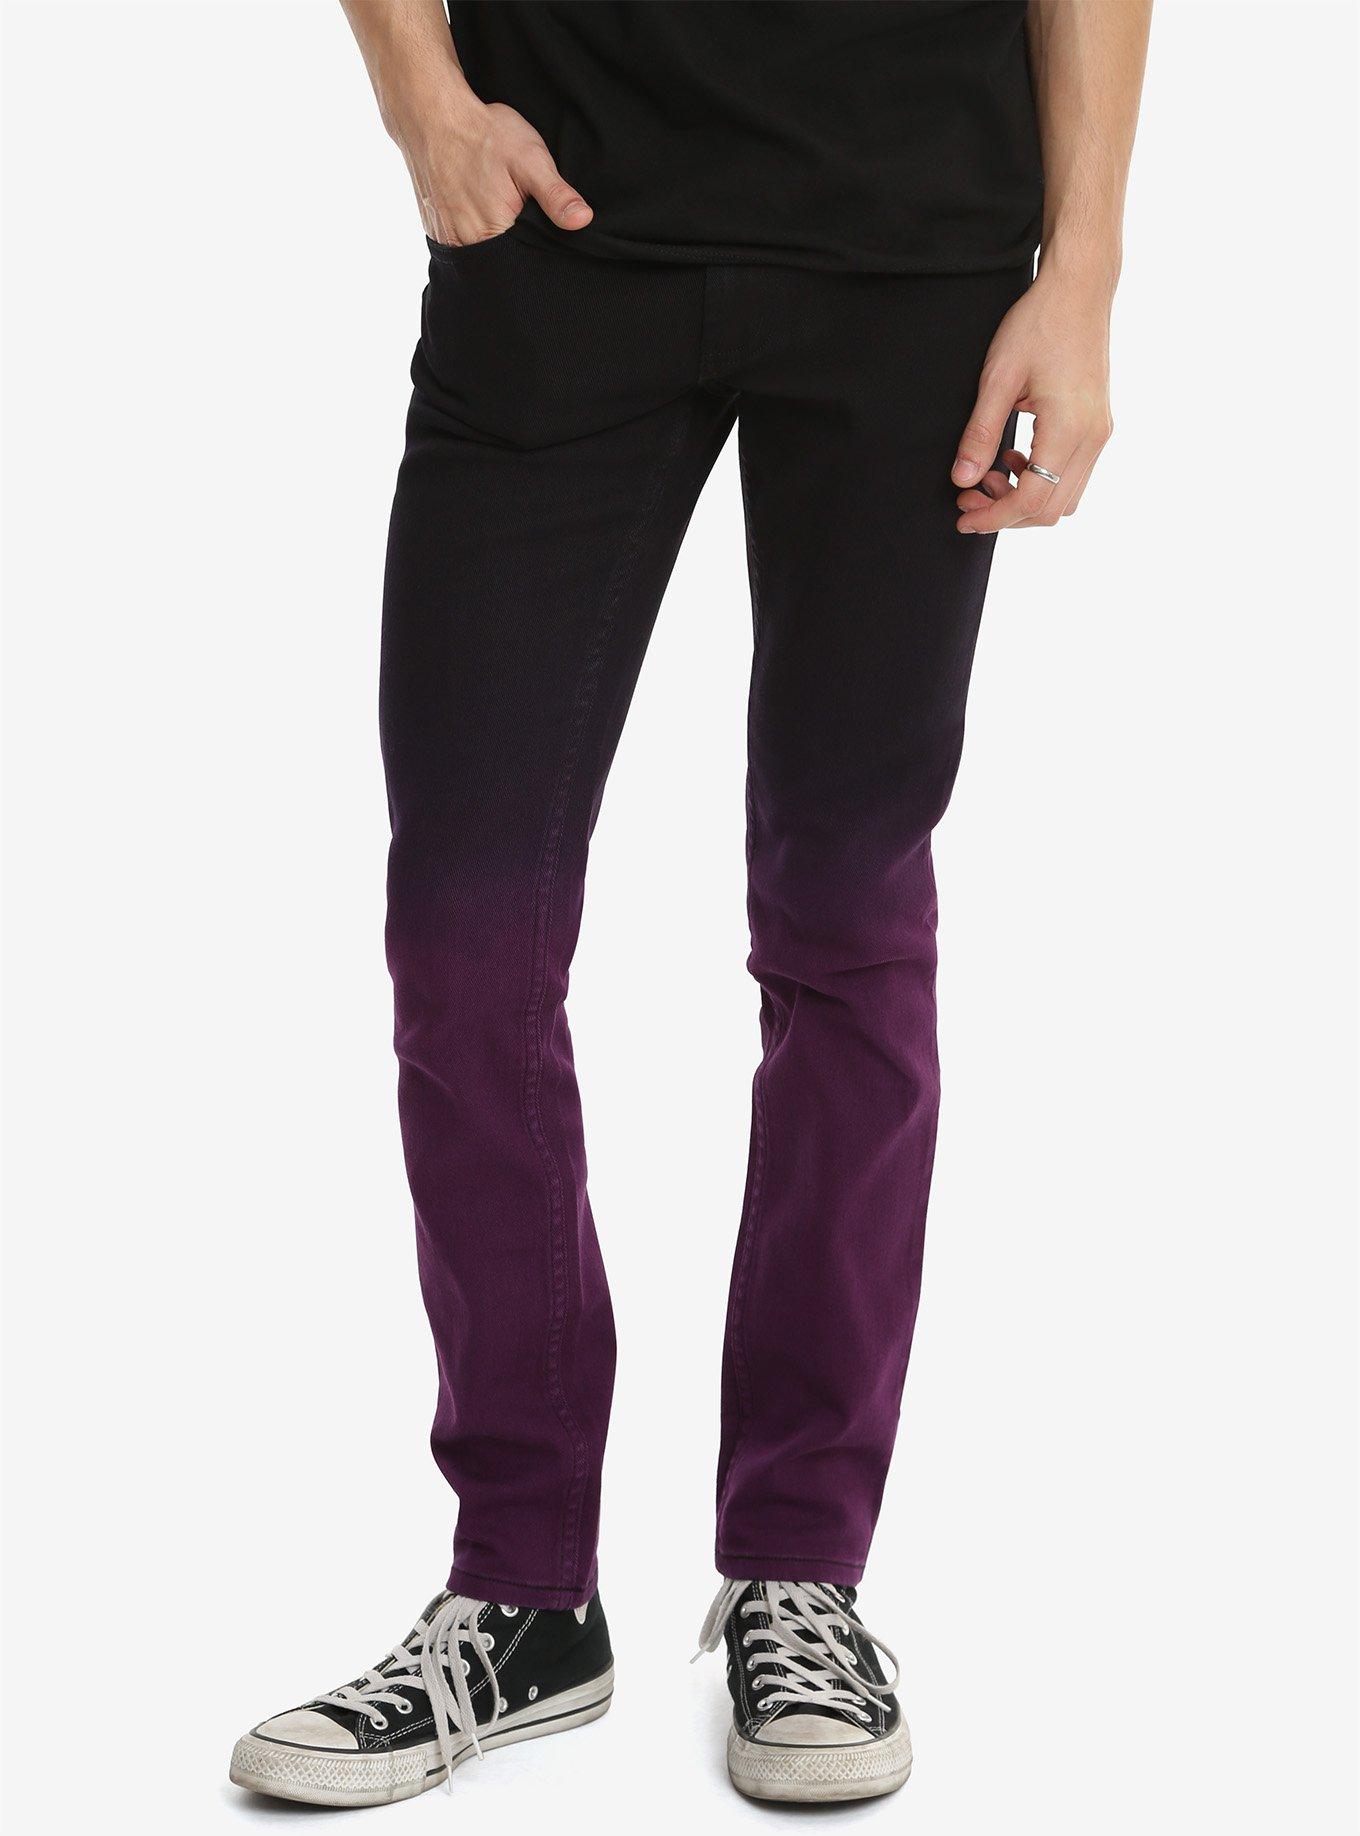 XXX RUDE Black & Purple Ombre Skinny Jeans, PURPLE, hi-res